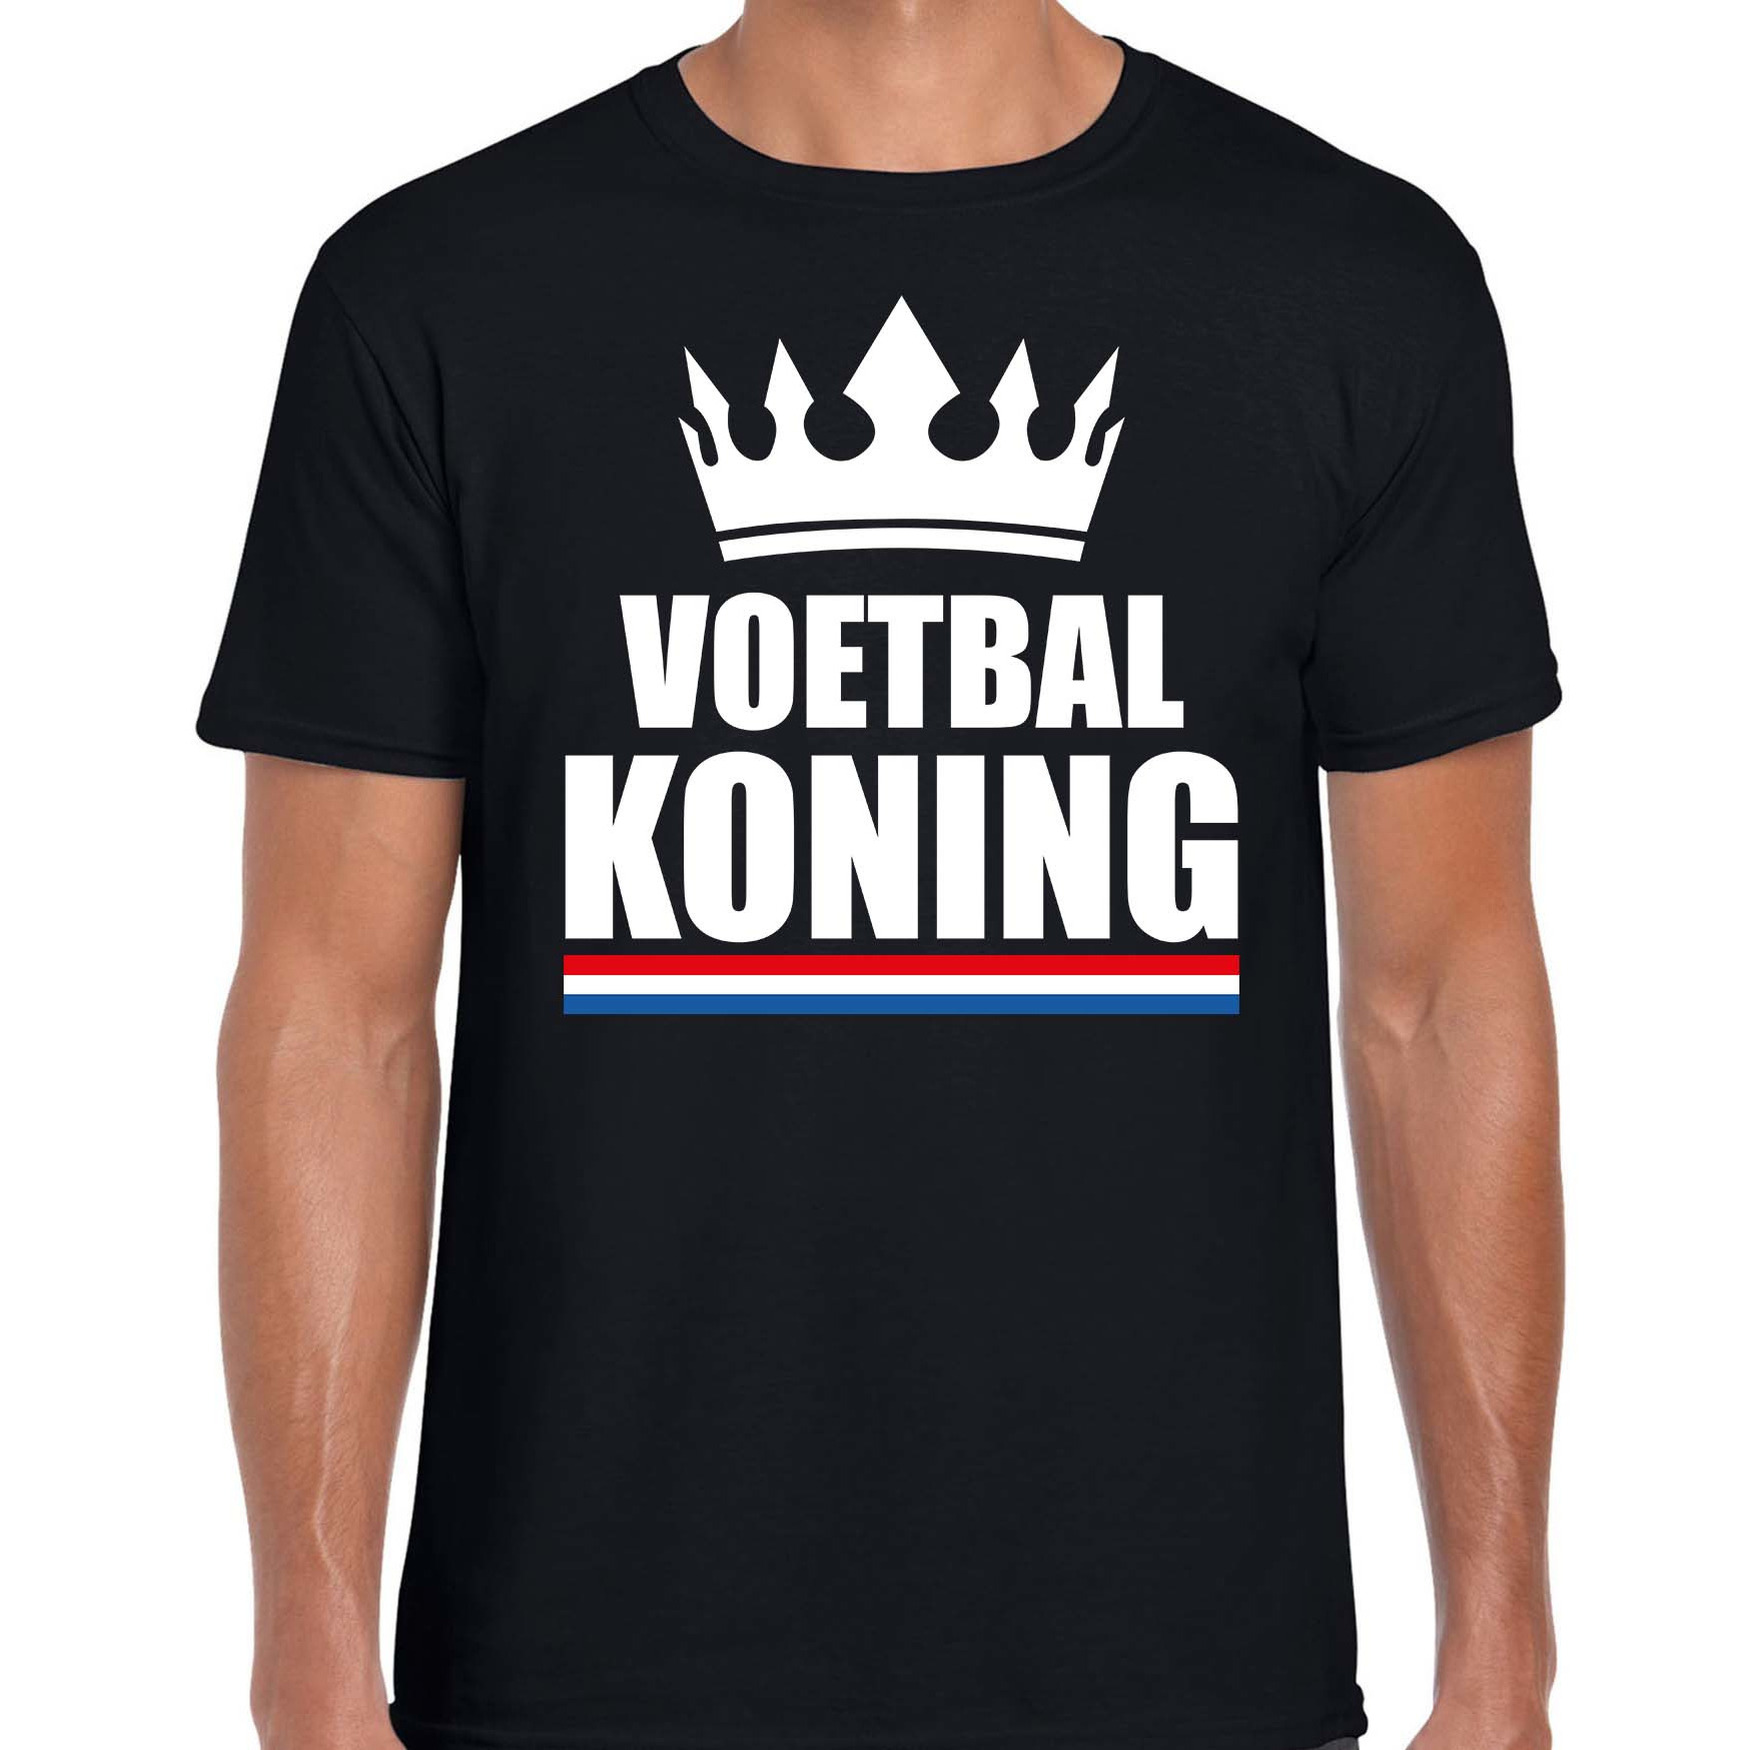 Voetbal koning t-shirt zwart heren - Sport - hobby shirts